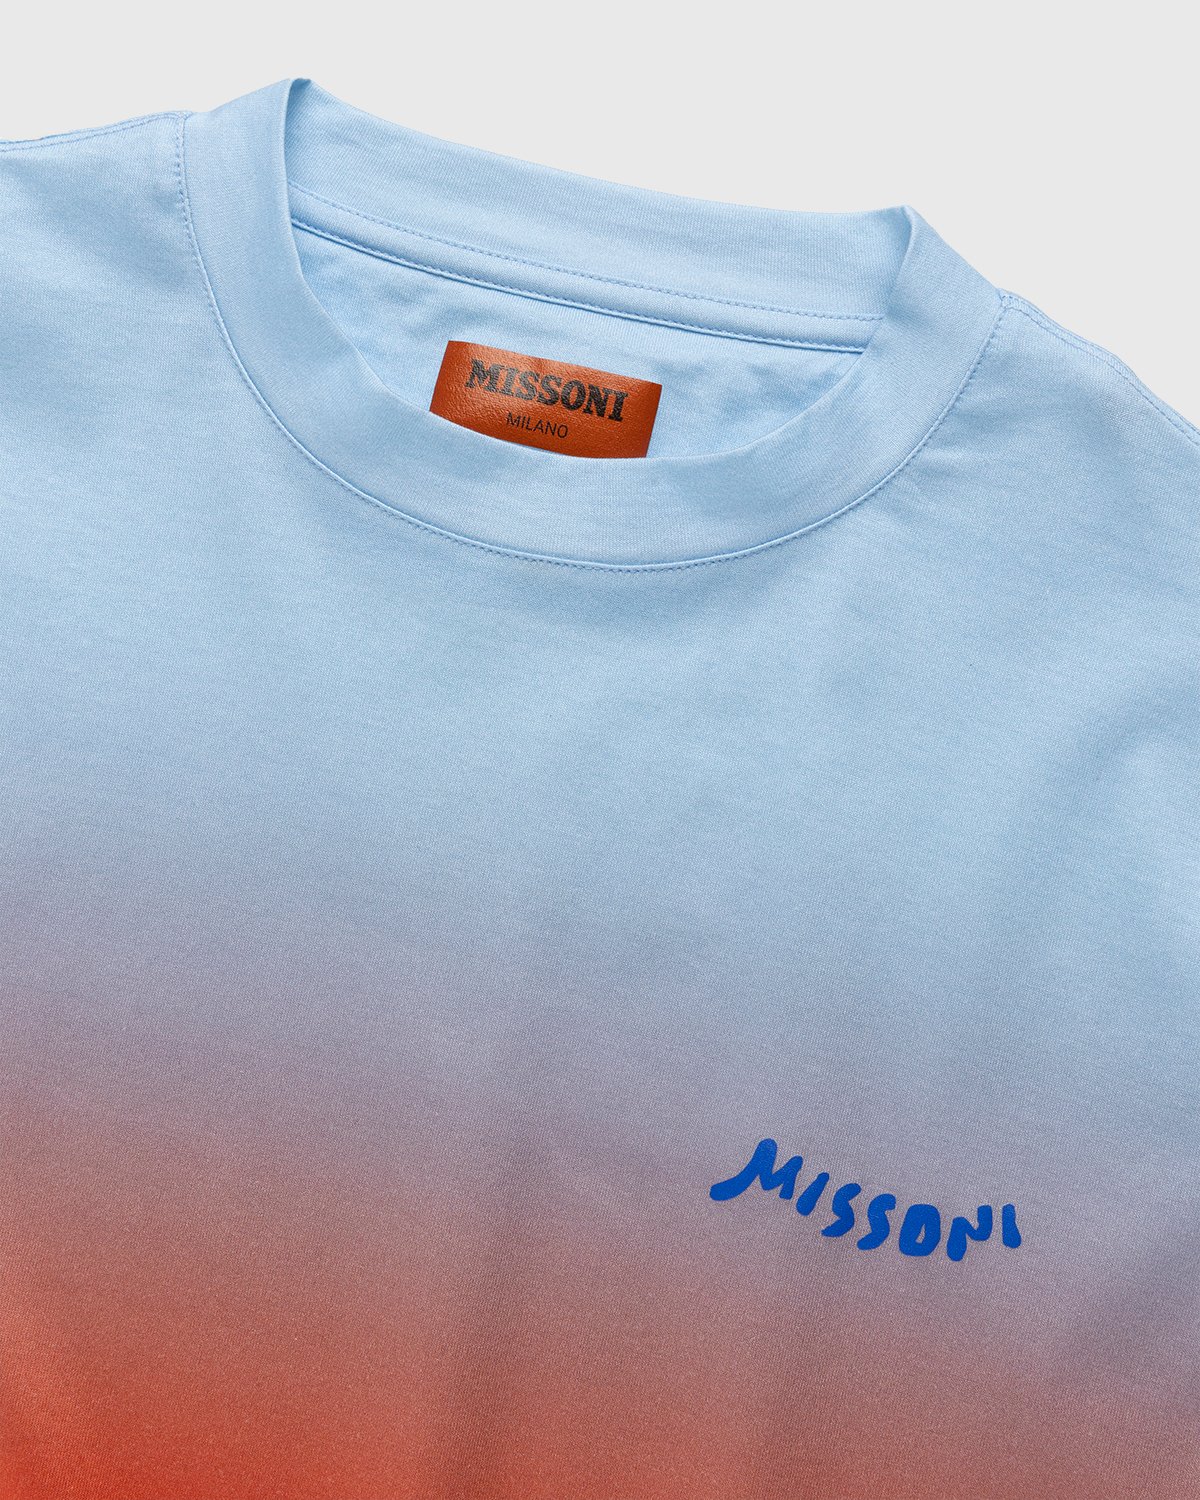 Missoni - Gradient Print T-Shirt Light blue - Clothing - Blue - Image 4